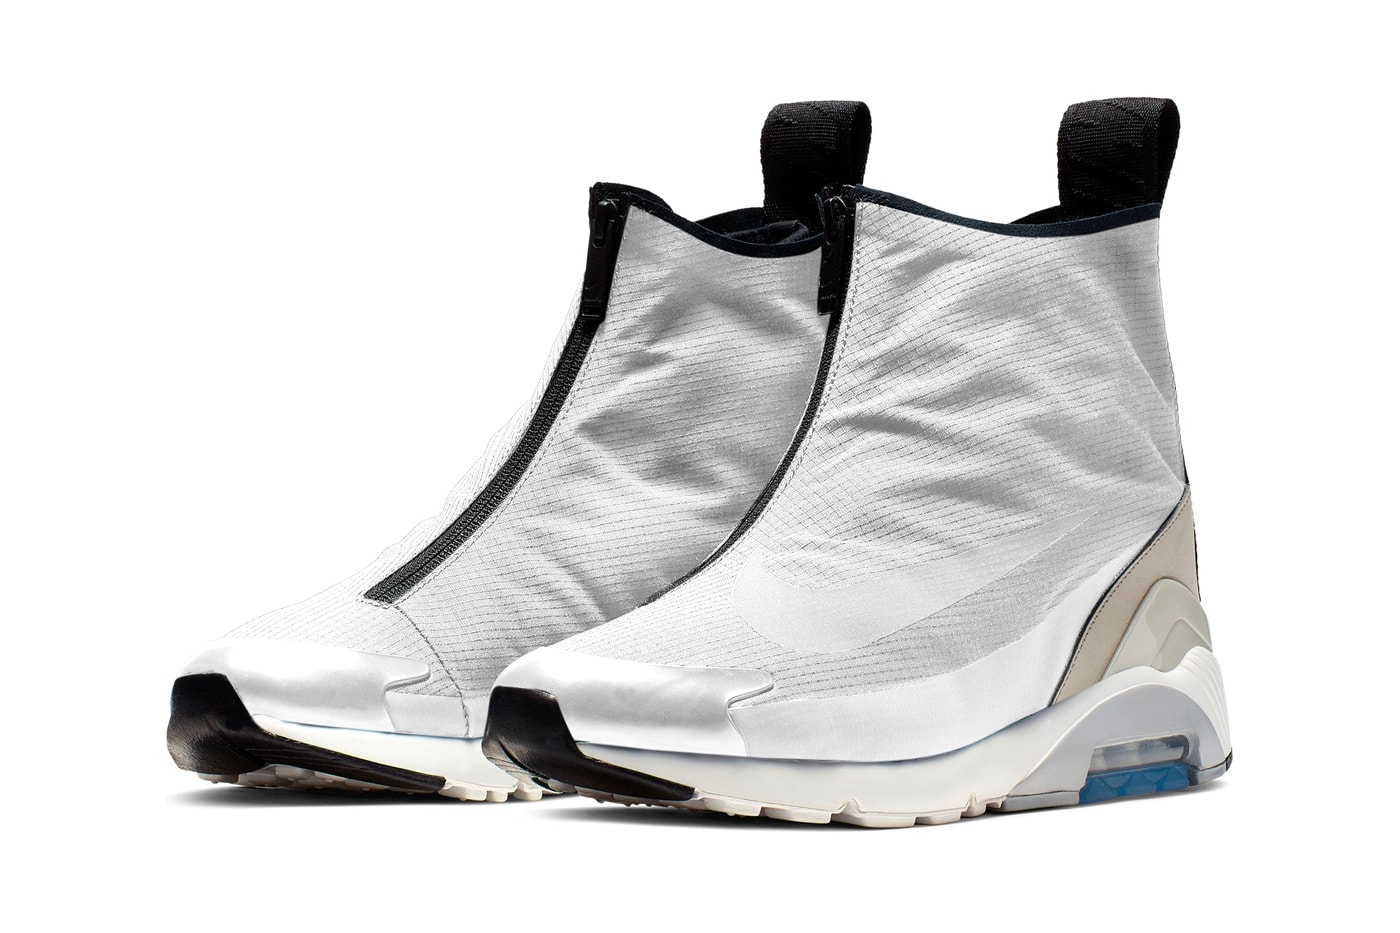 Ambush Nike Air Max 180 "Light Bone" Release Info BV0145-100 drop date pricing stockist price White White-Pale Grey-Light Bone April 26 Yoon Ahn 